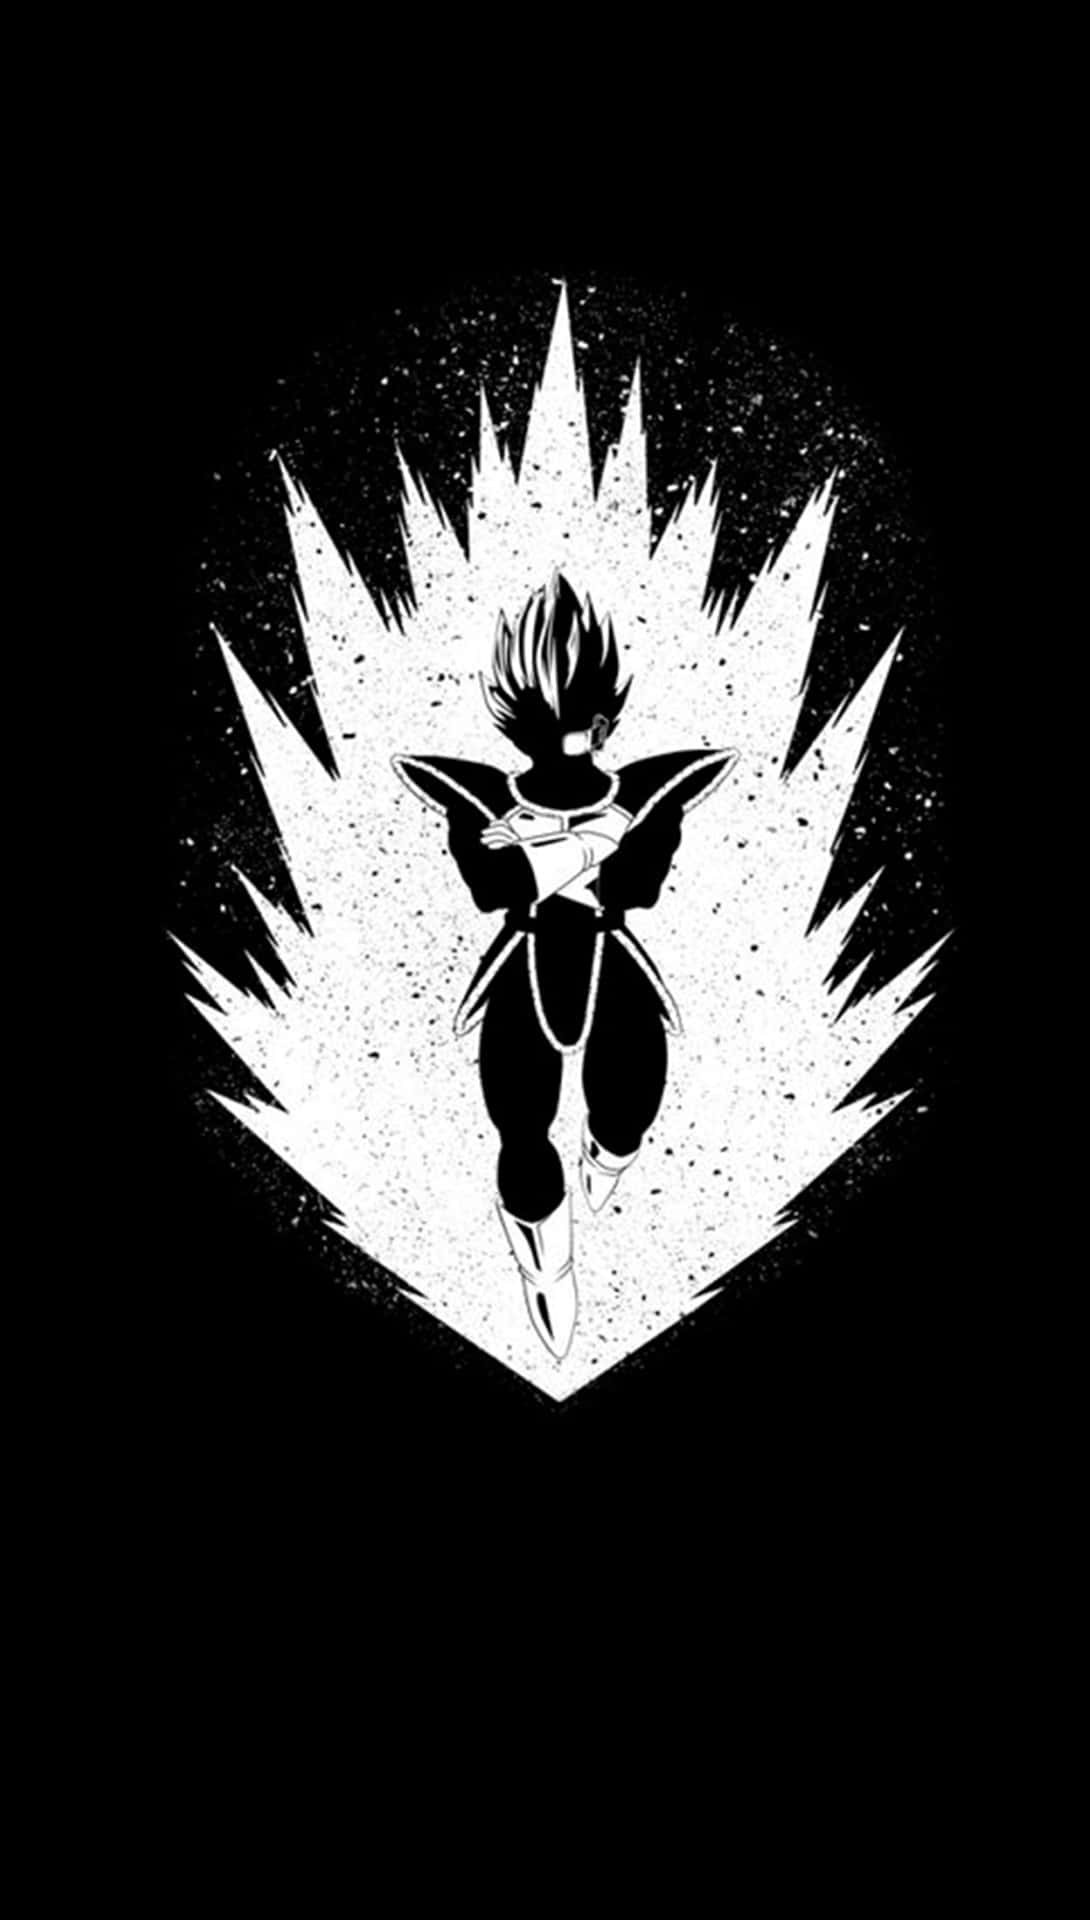 Vegeta Black and White - Super Saiyan Hero Wallpaper